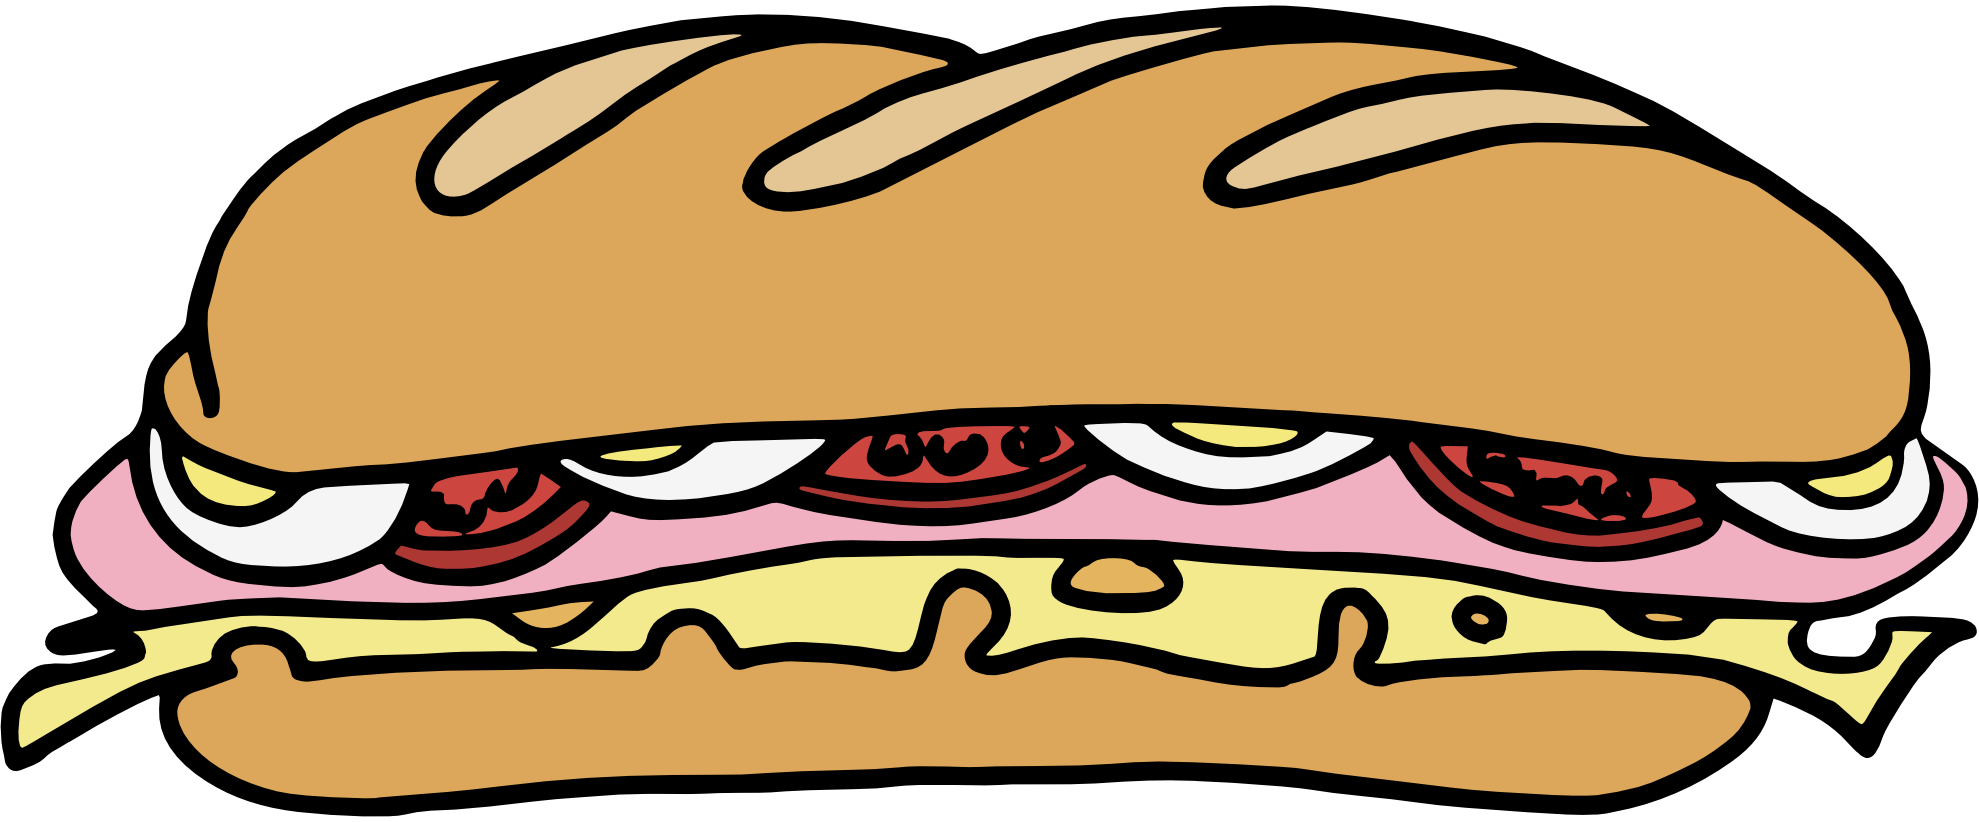 grilled cheese sandwich cartoon - Clip Art Library